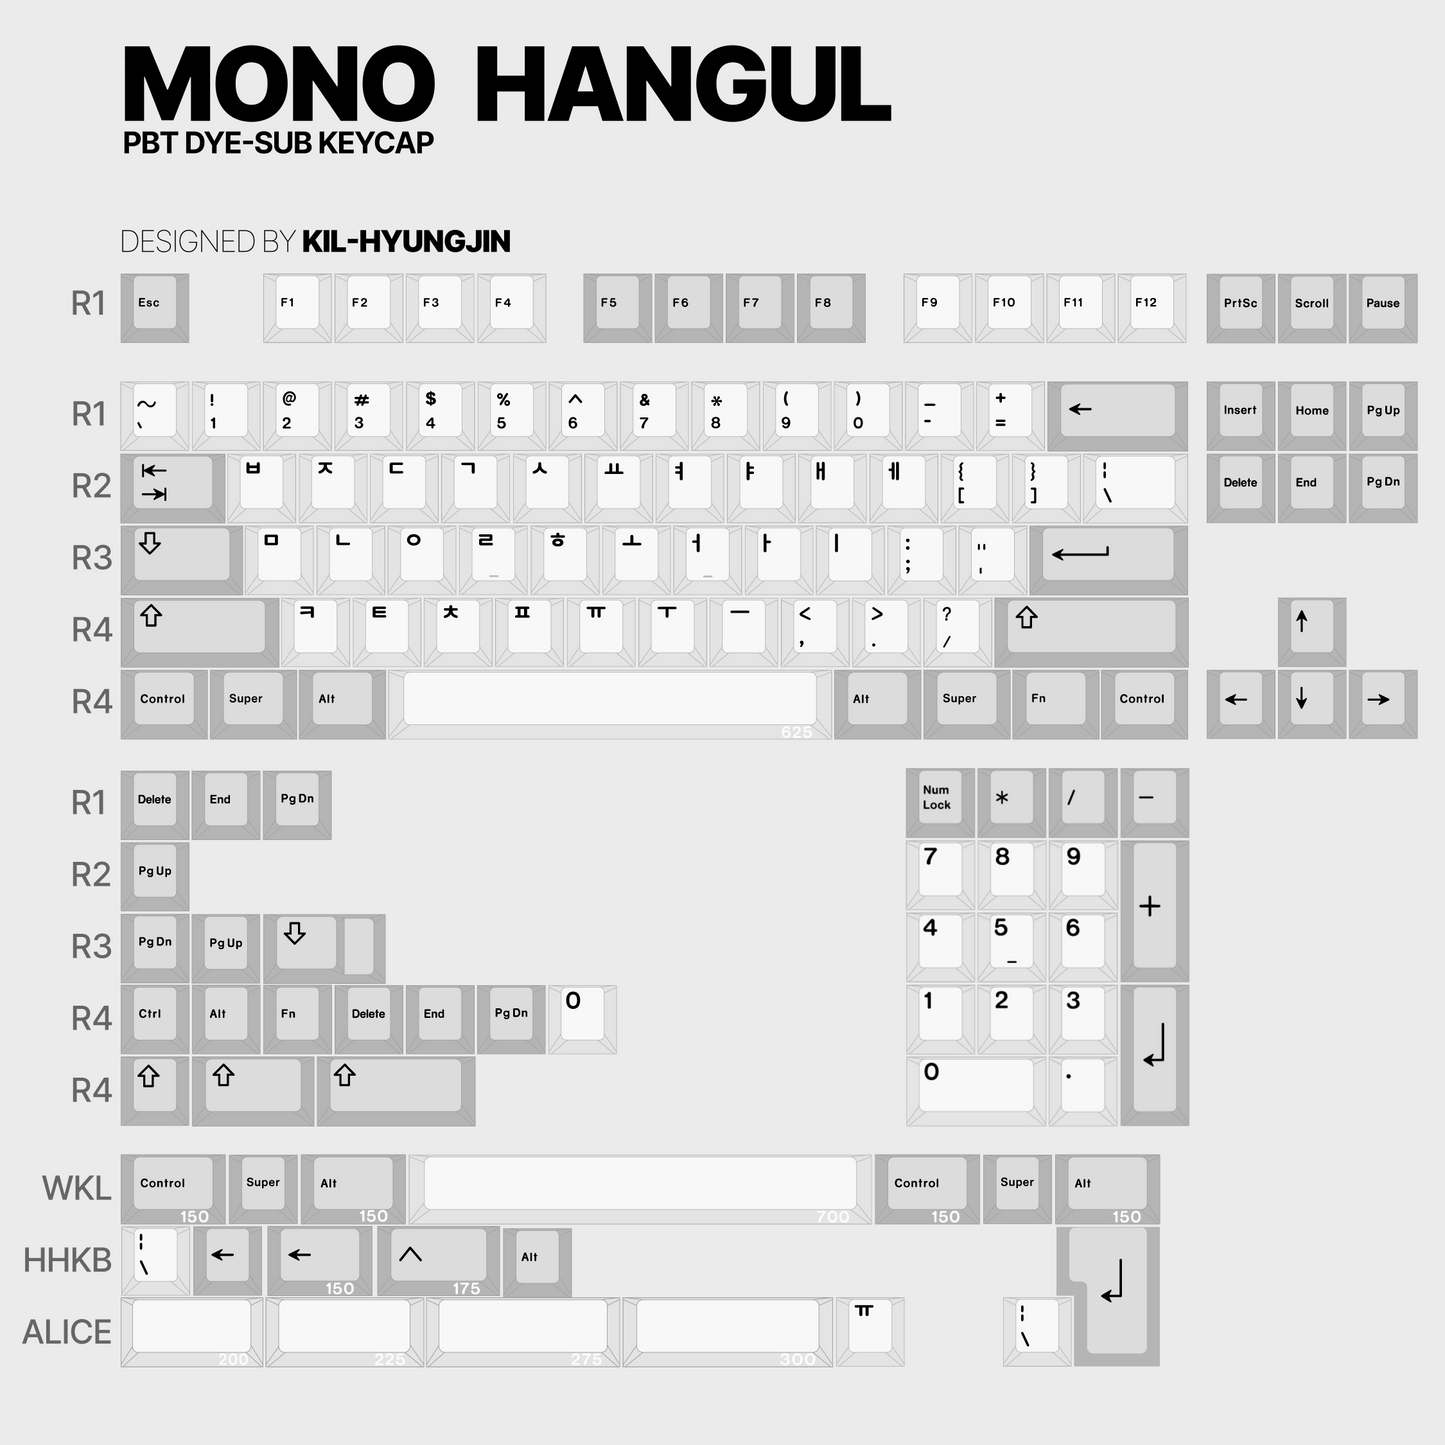 Mono Hangul PBT Dye-sub Keycap